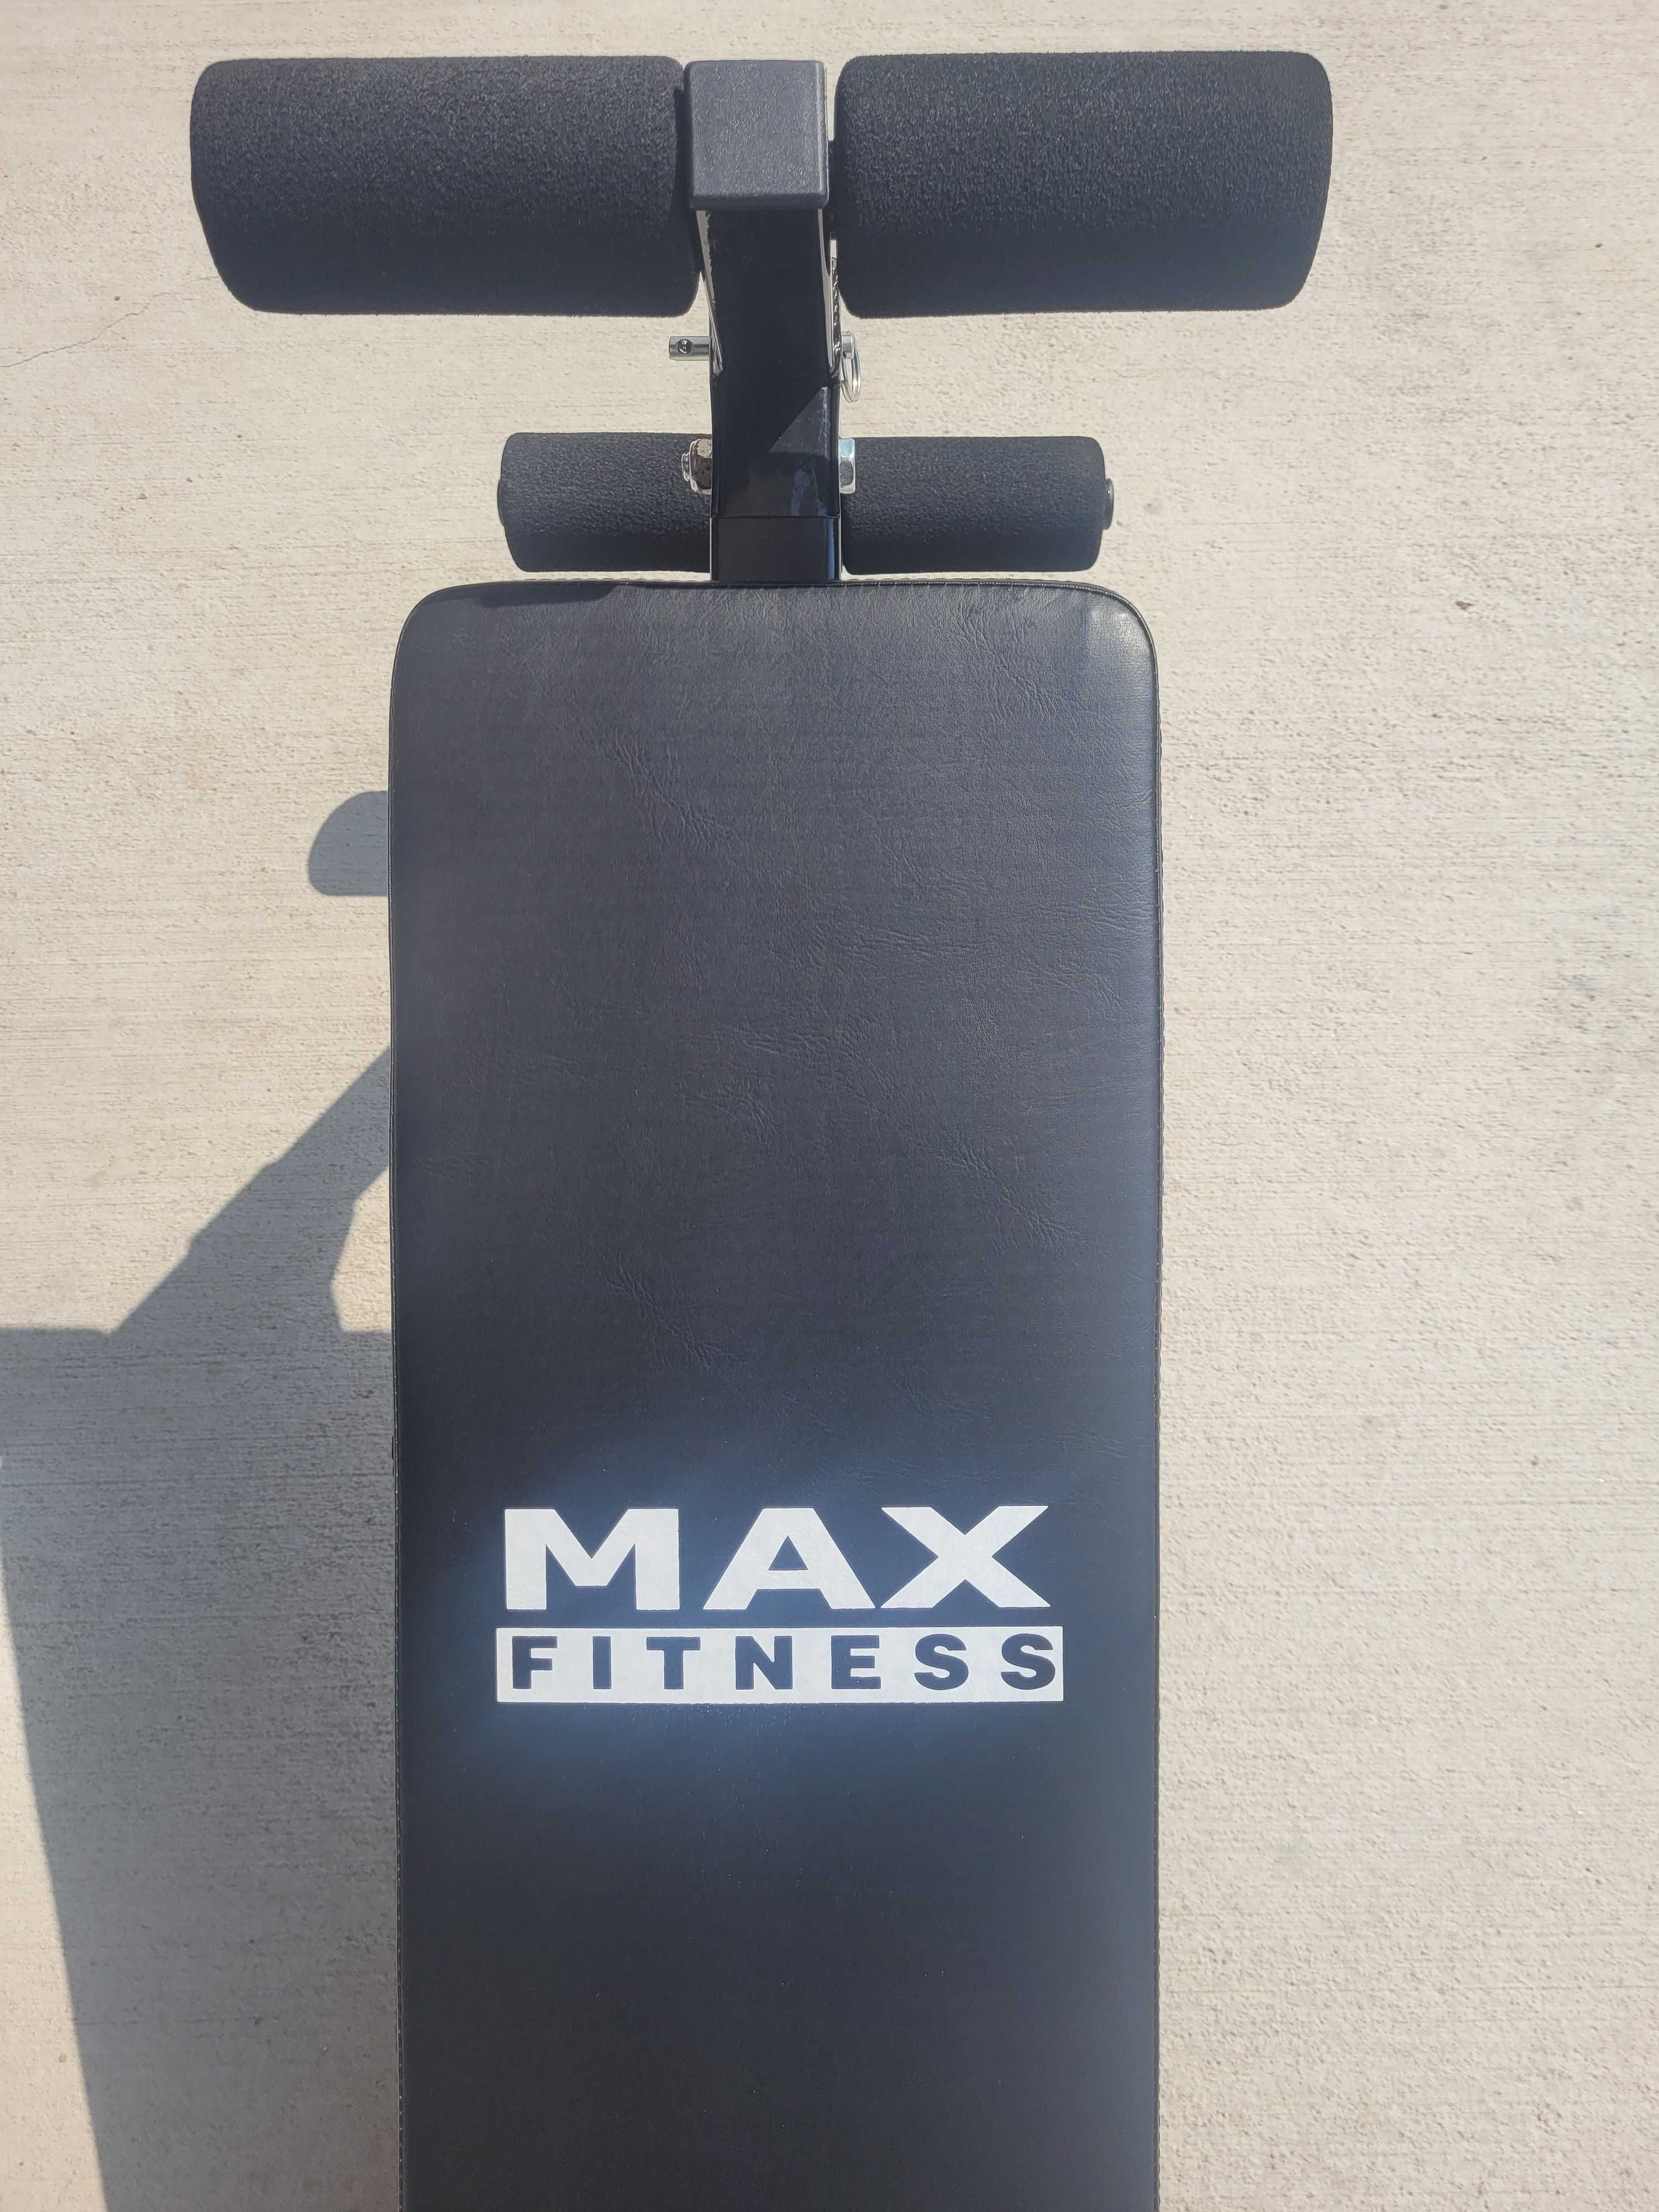 Професионален уред за коремни преси: "Max Fitness "